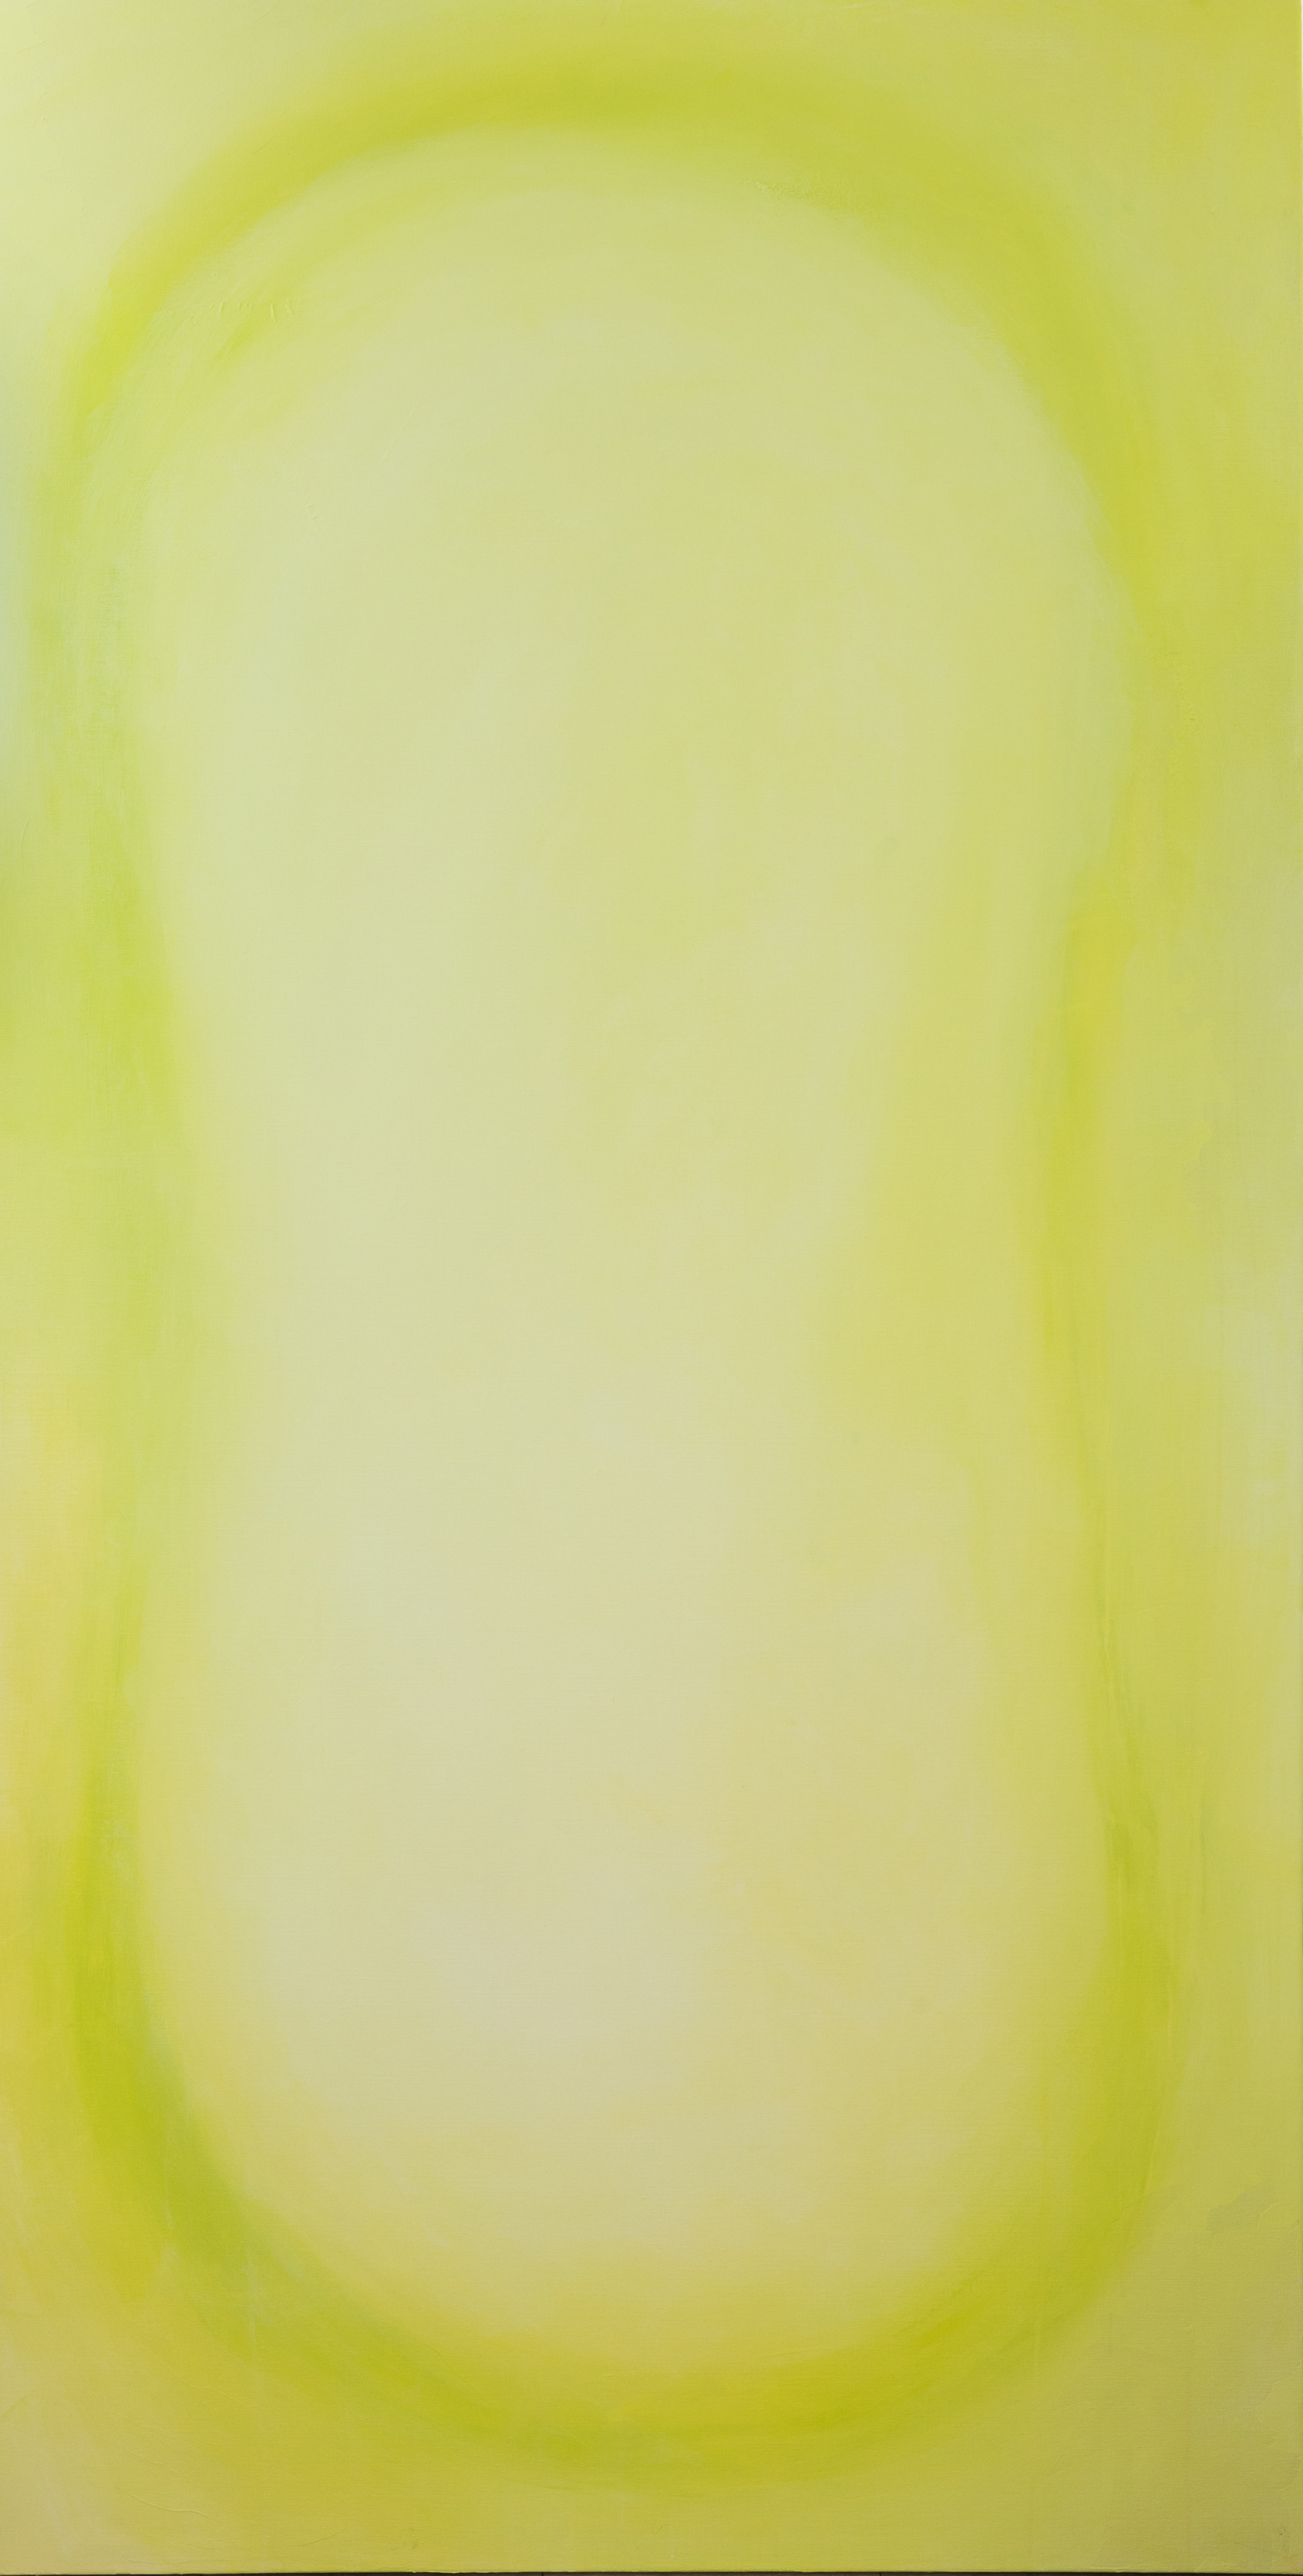 Yaman Shao, The Entrance of the Dream, 2021, acrylic on canvas, 235x118 cm © ALIEN Art Centre 